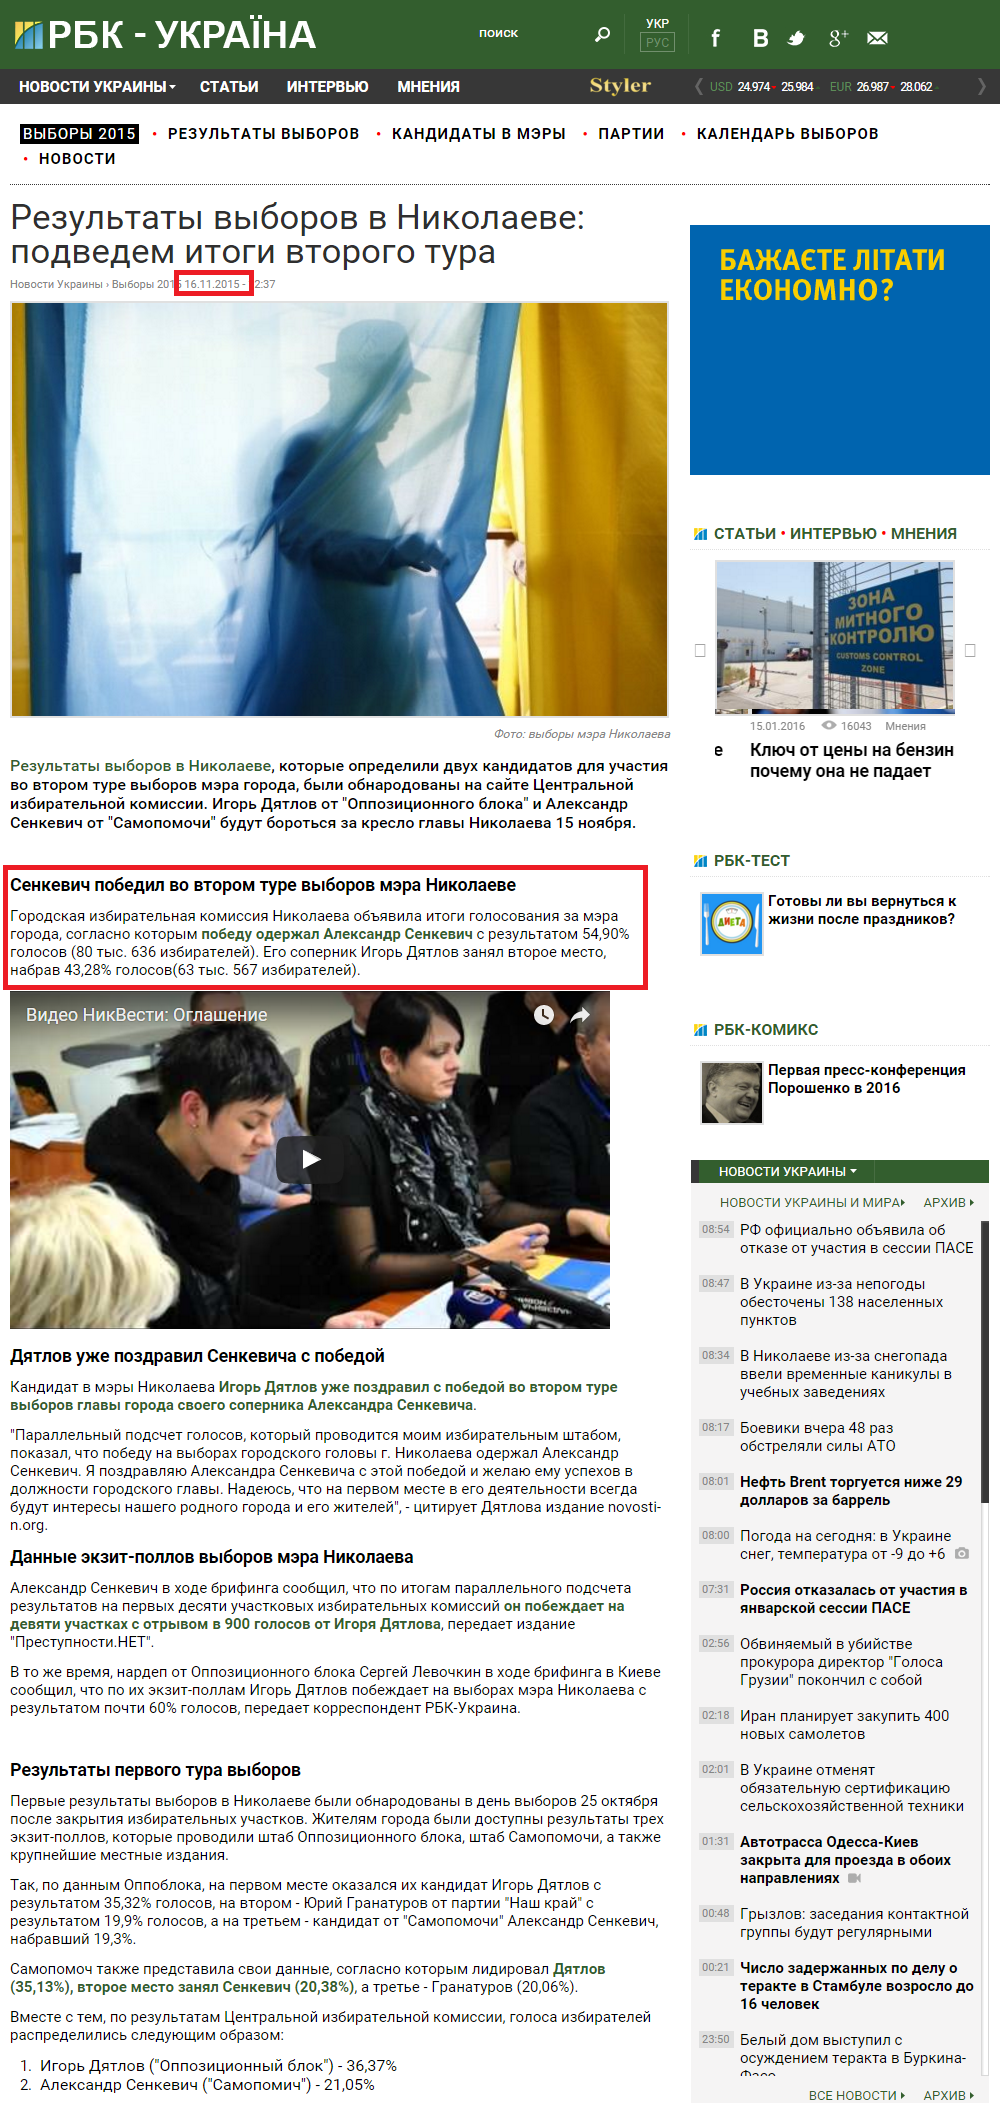 http://elections.rbc.ua/rus/news/rezultaty-vyborov-nikolaeve-1447232365.html